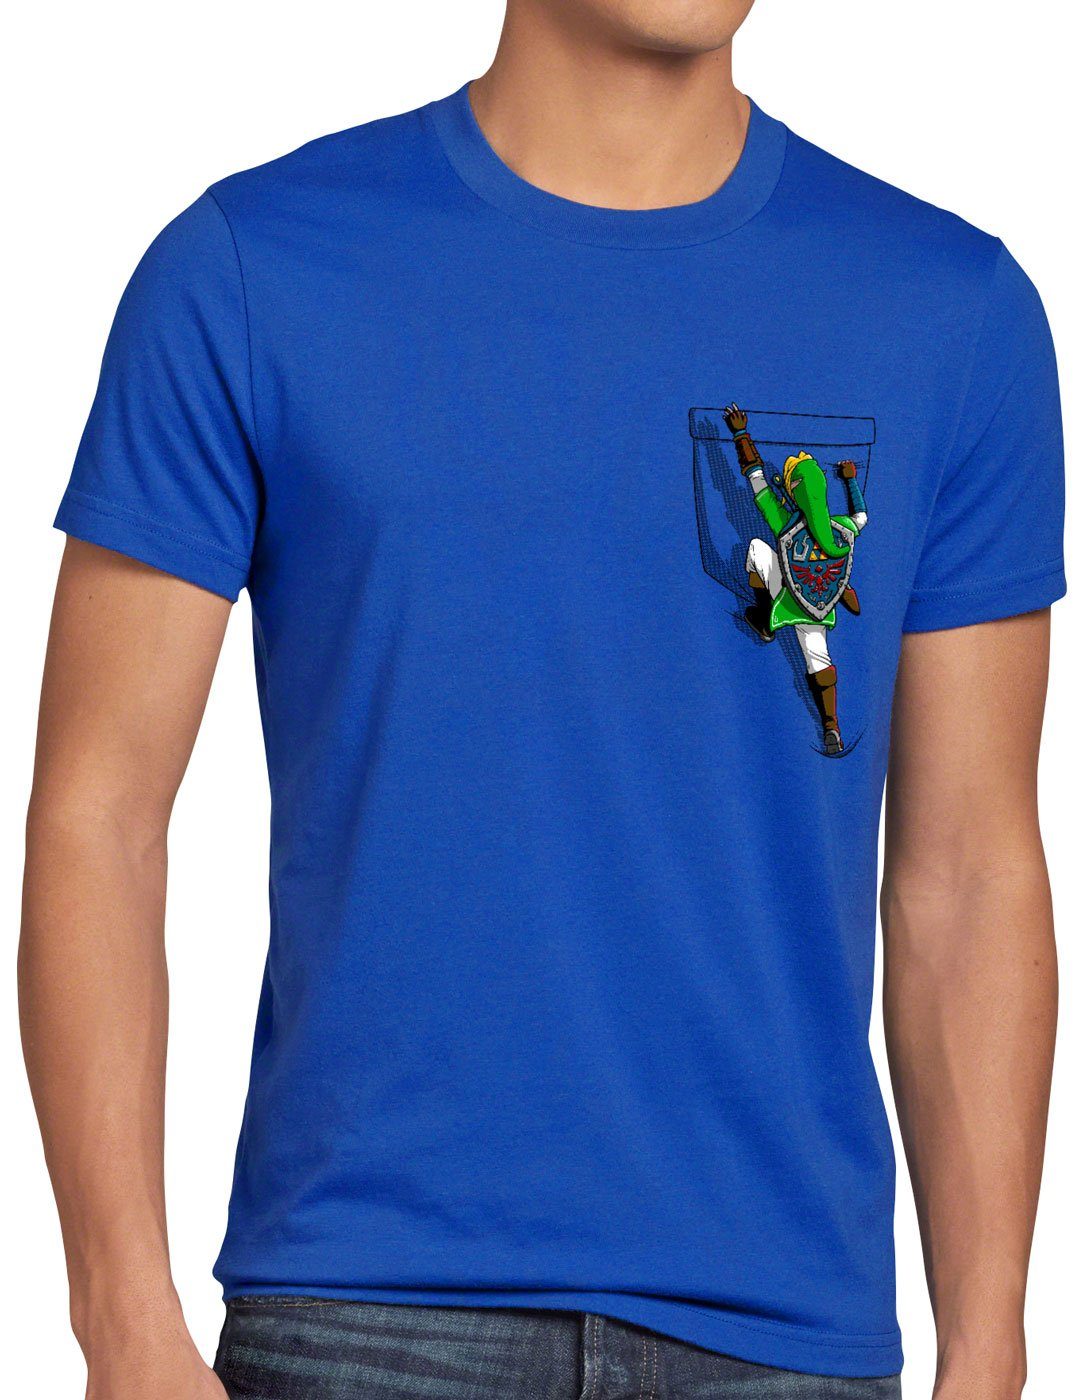 style3 Print-Shirt Herren T-Shirt Link Brusttasche wild switch the breath of snes ocarina blau | T-Shirts